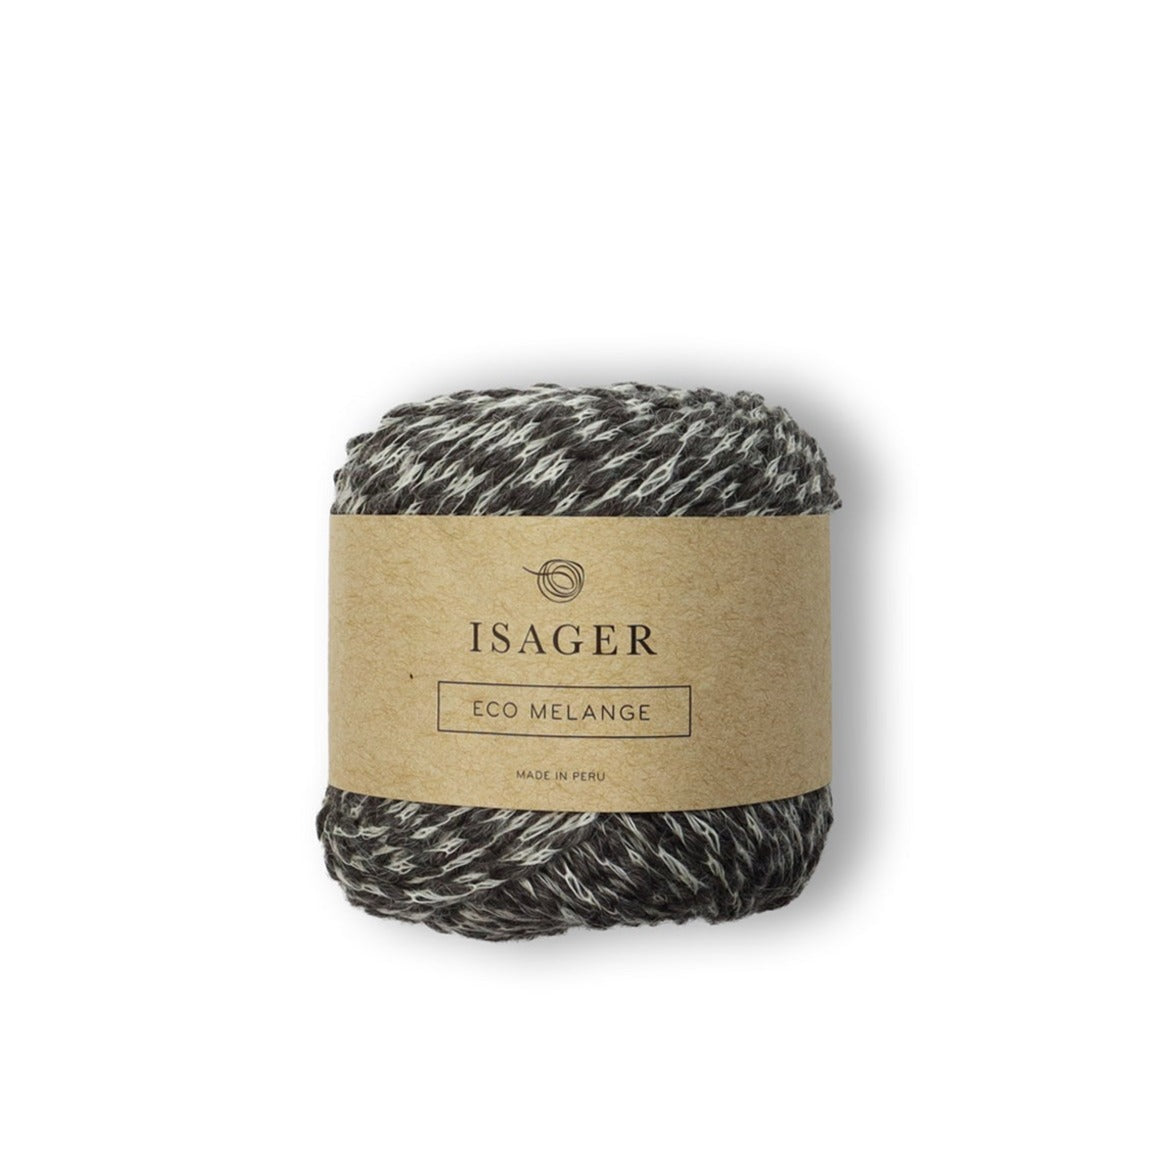 Isager and Knitting Patterns | Buy Baby Alpaca Yarn from Yarns "Yarn" tribeyarns